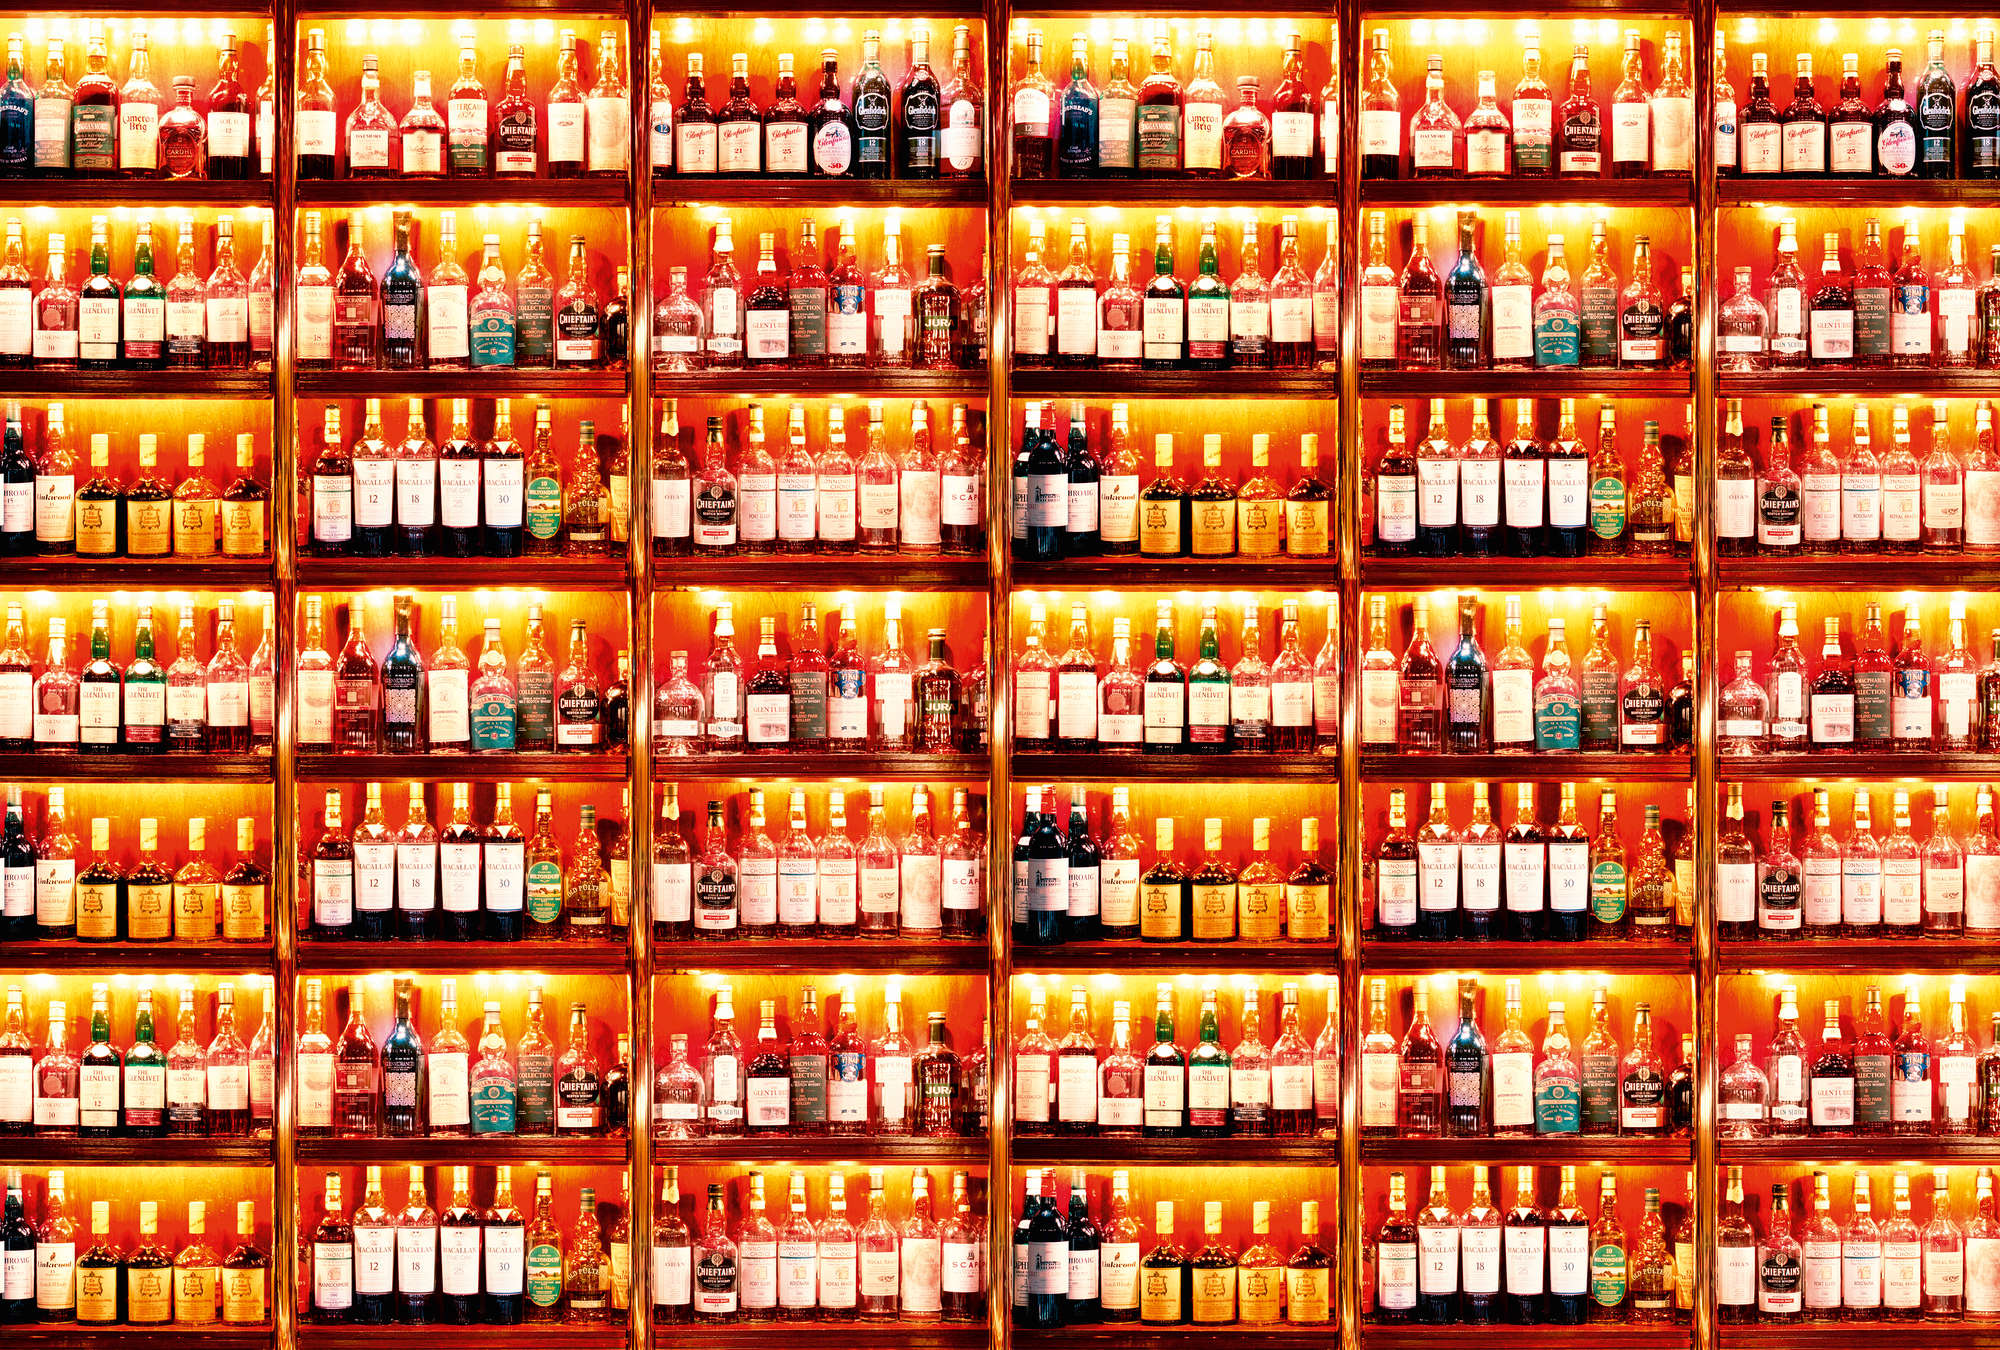             Flaschenregal – Fototapete Bar Motiv Spiritus Regal
        